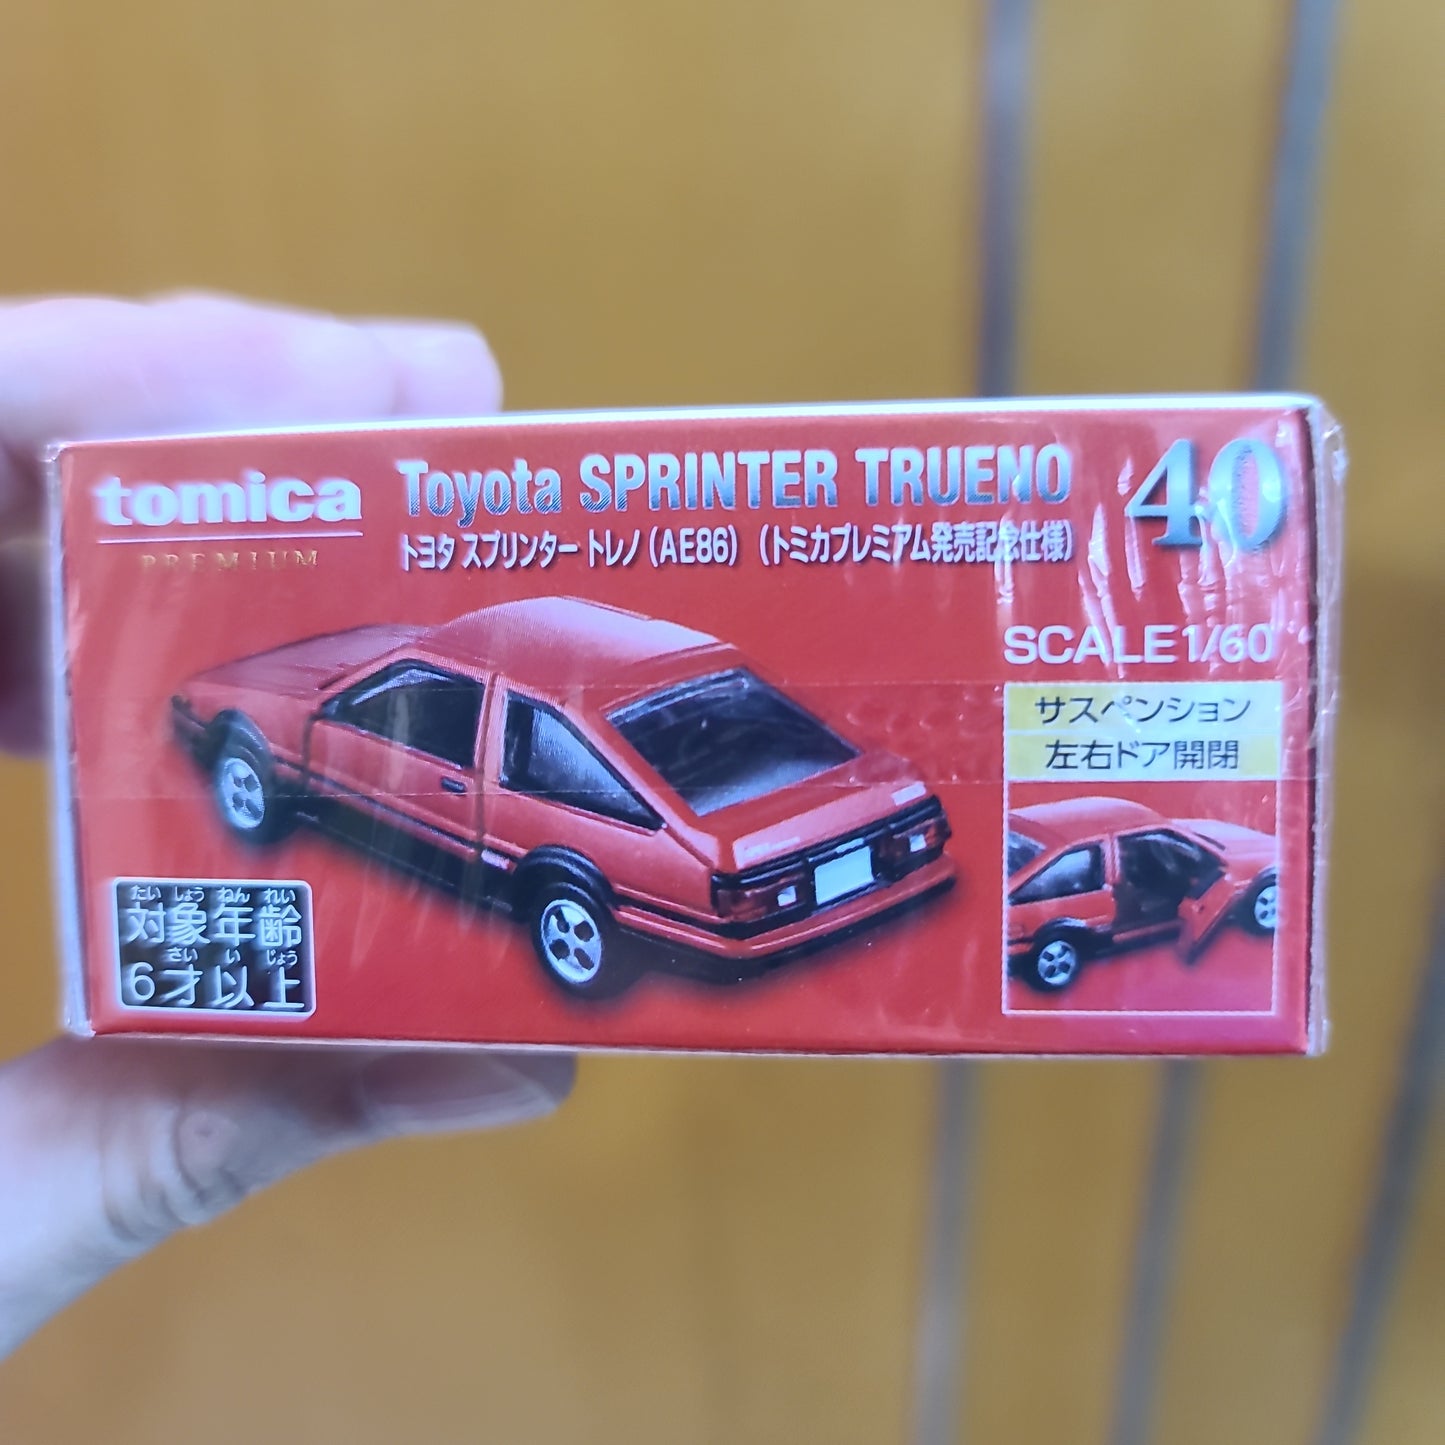 Tomica Premium No.40 Toyota Corolla Sprinter Trueno AE86 set of Two